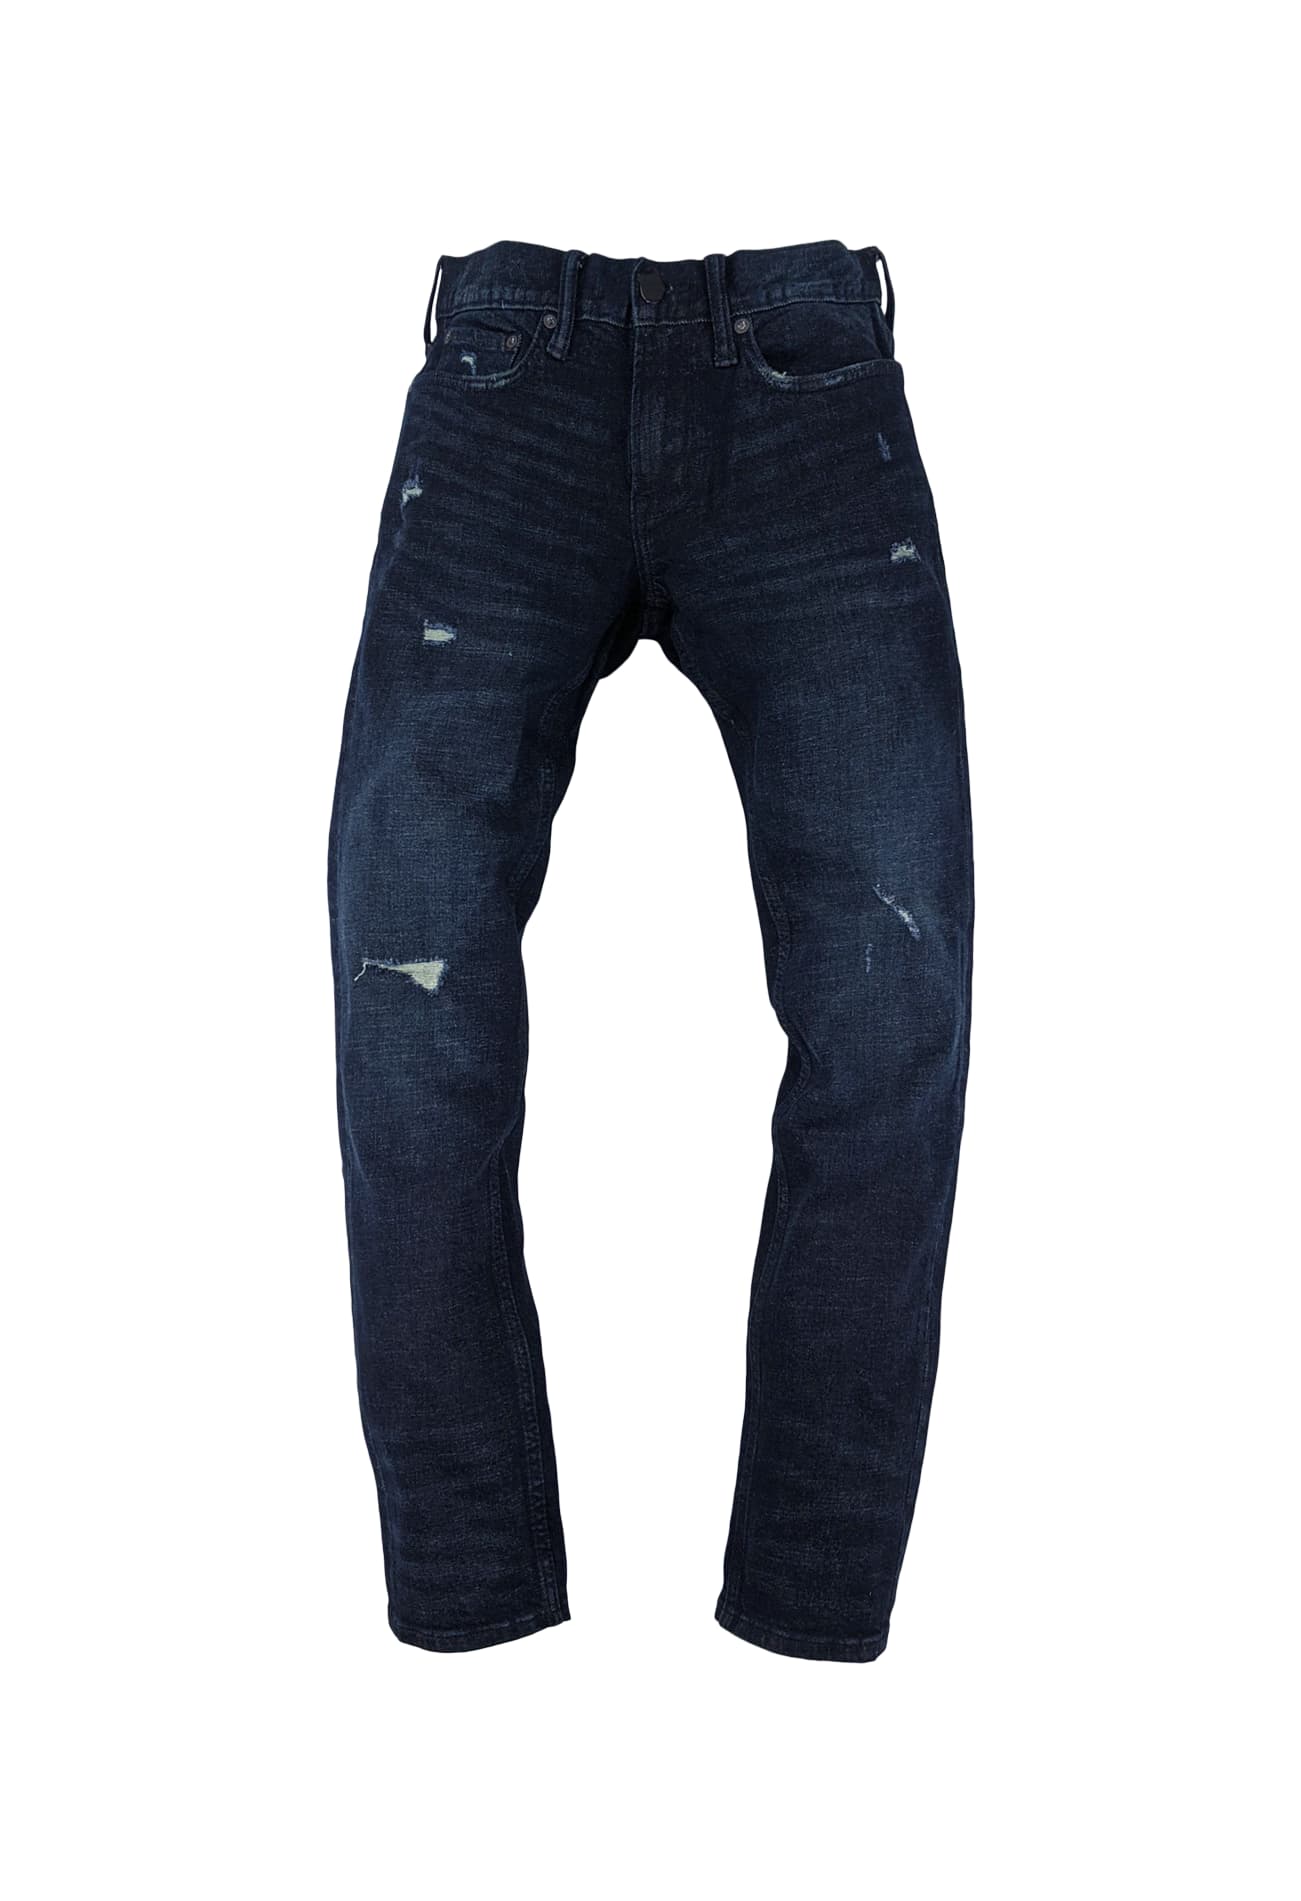 Men’s Slim Built-In Flex Distressed Jeans M-00777 – Time Tailor